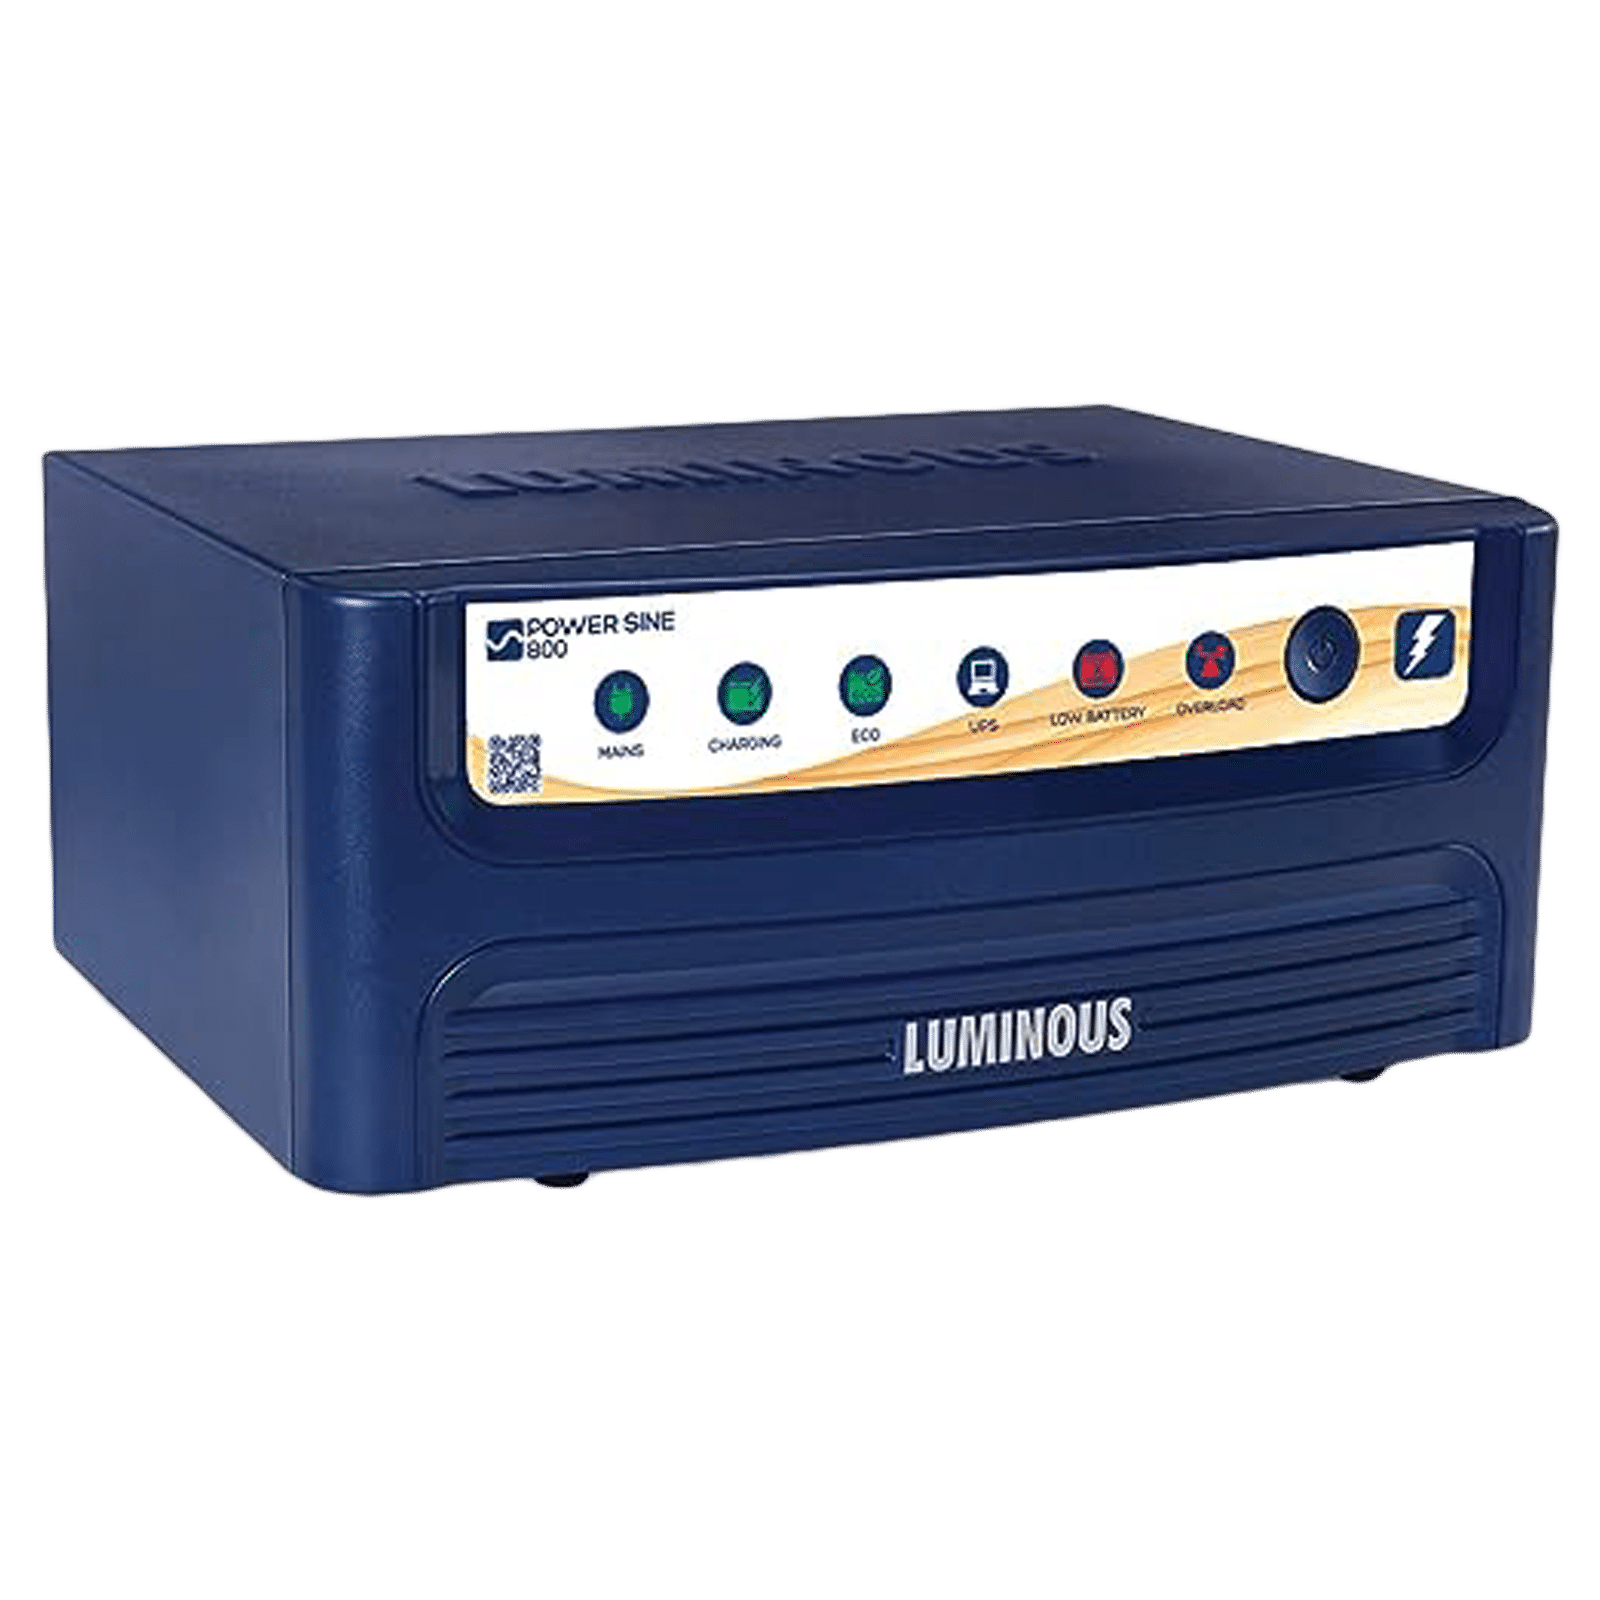 Buy LUMINOUS Powersine 800 24.5 Amps Inverter (Fast Charging